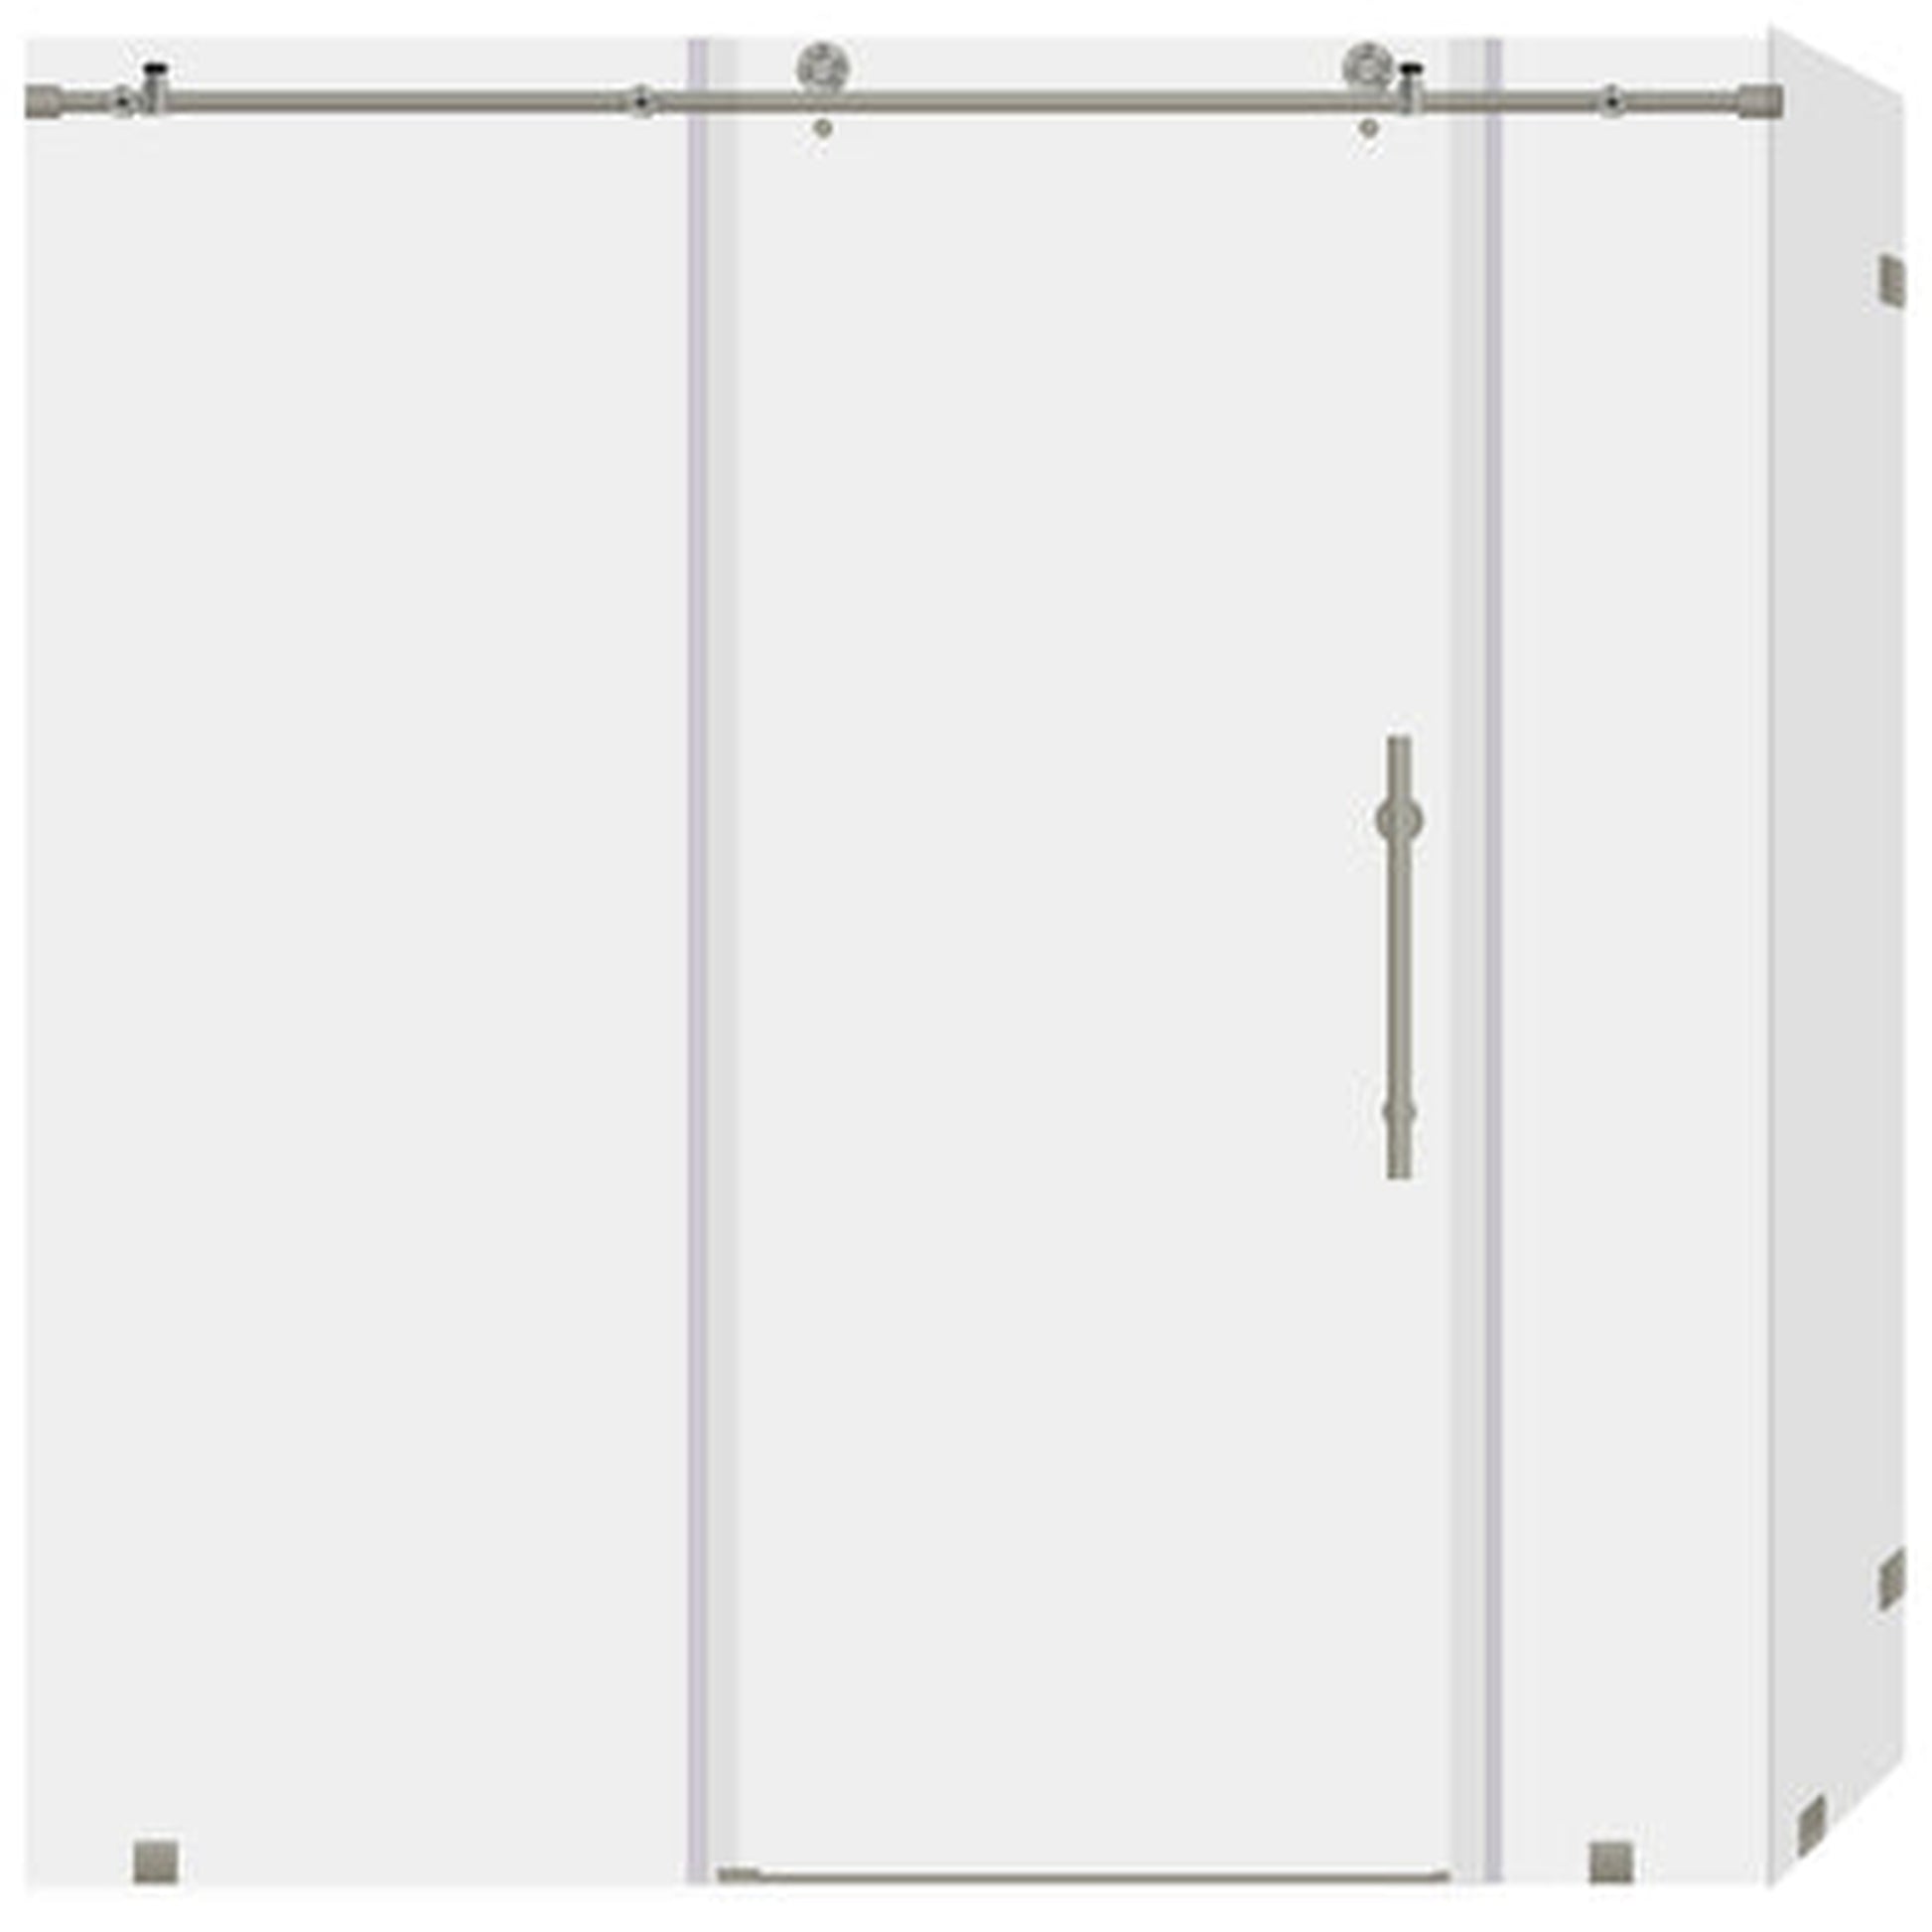 LessCare Ultra-C 68-72" x 76" x 34 1/2" Brushed Nickel Sliding Shower Enclosure